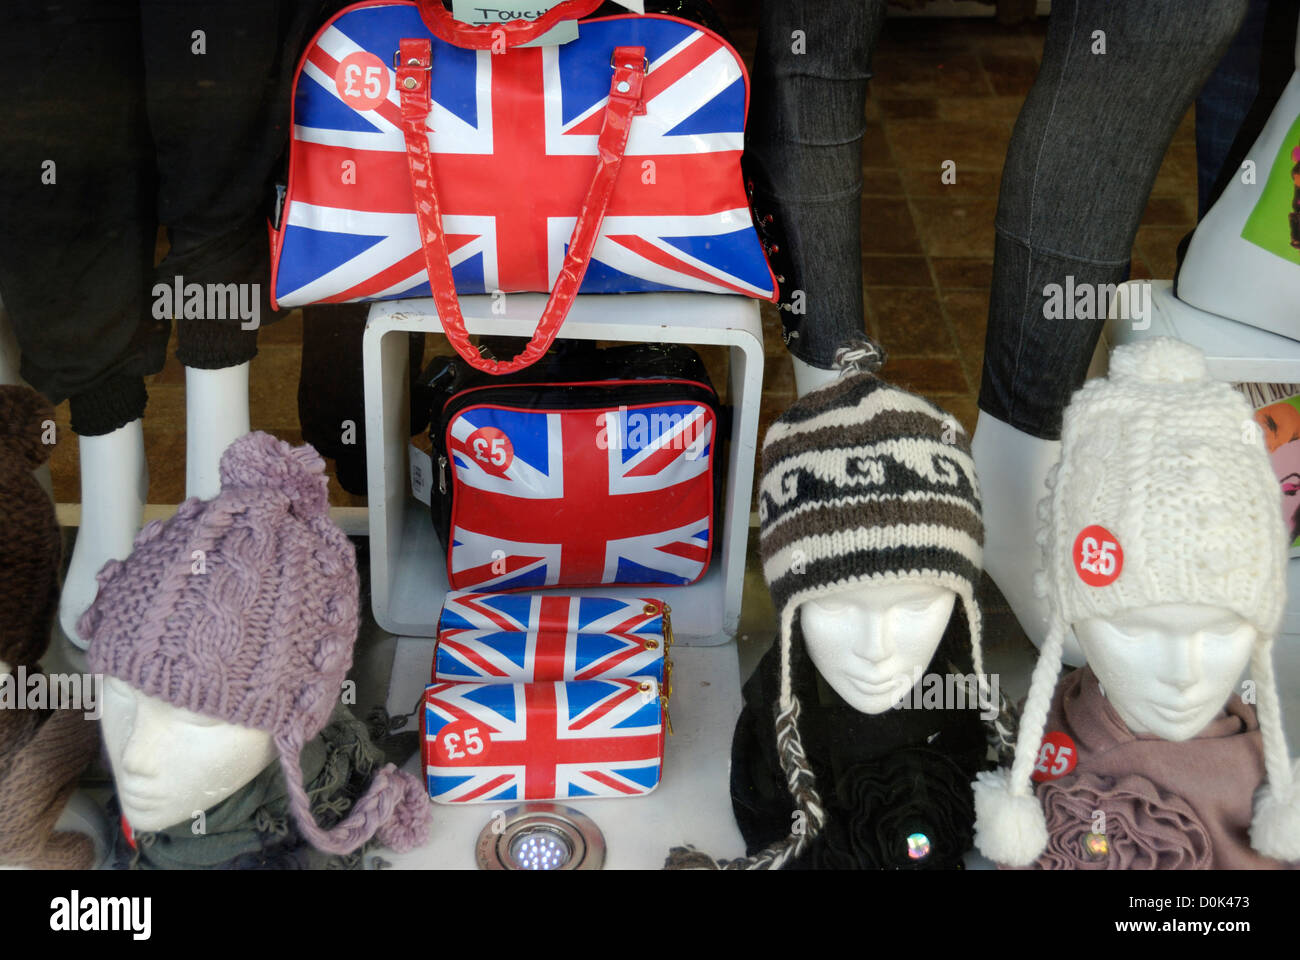 Union Jack handbags in a shop window display. Stock Photo